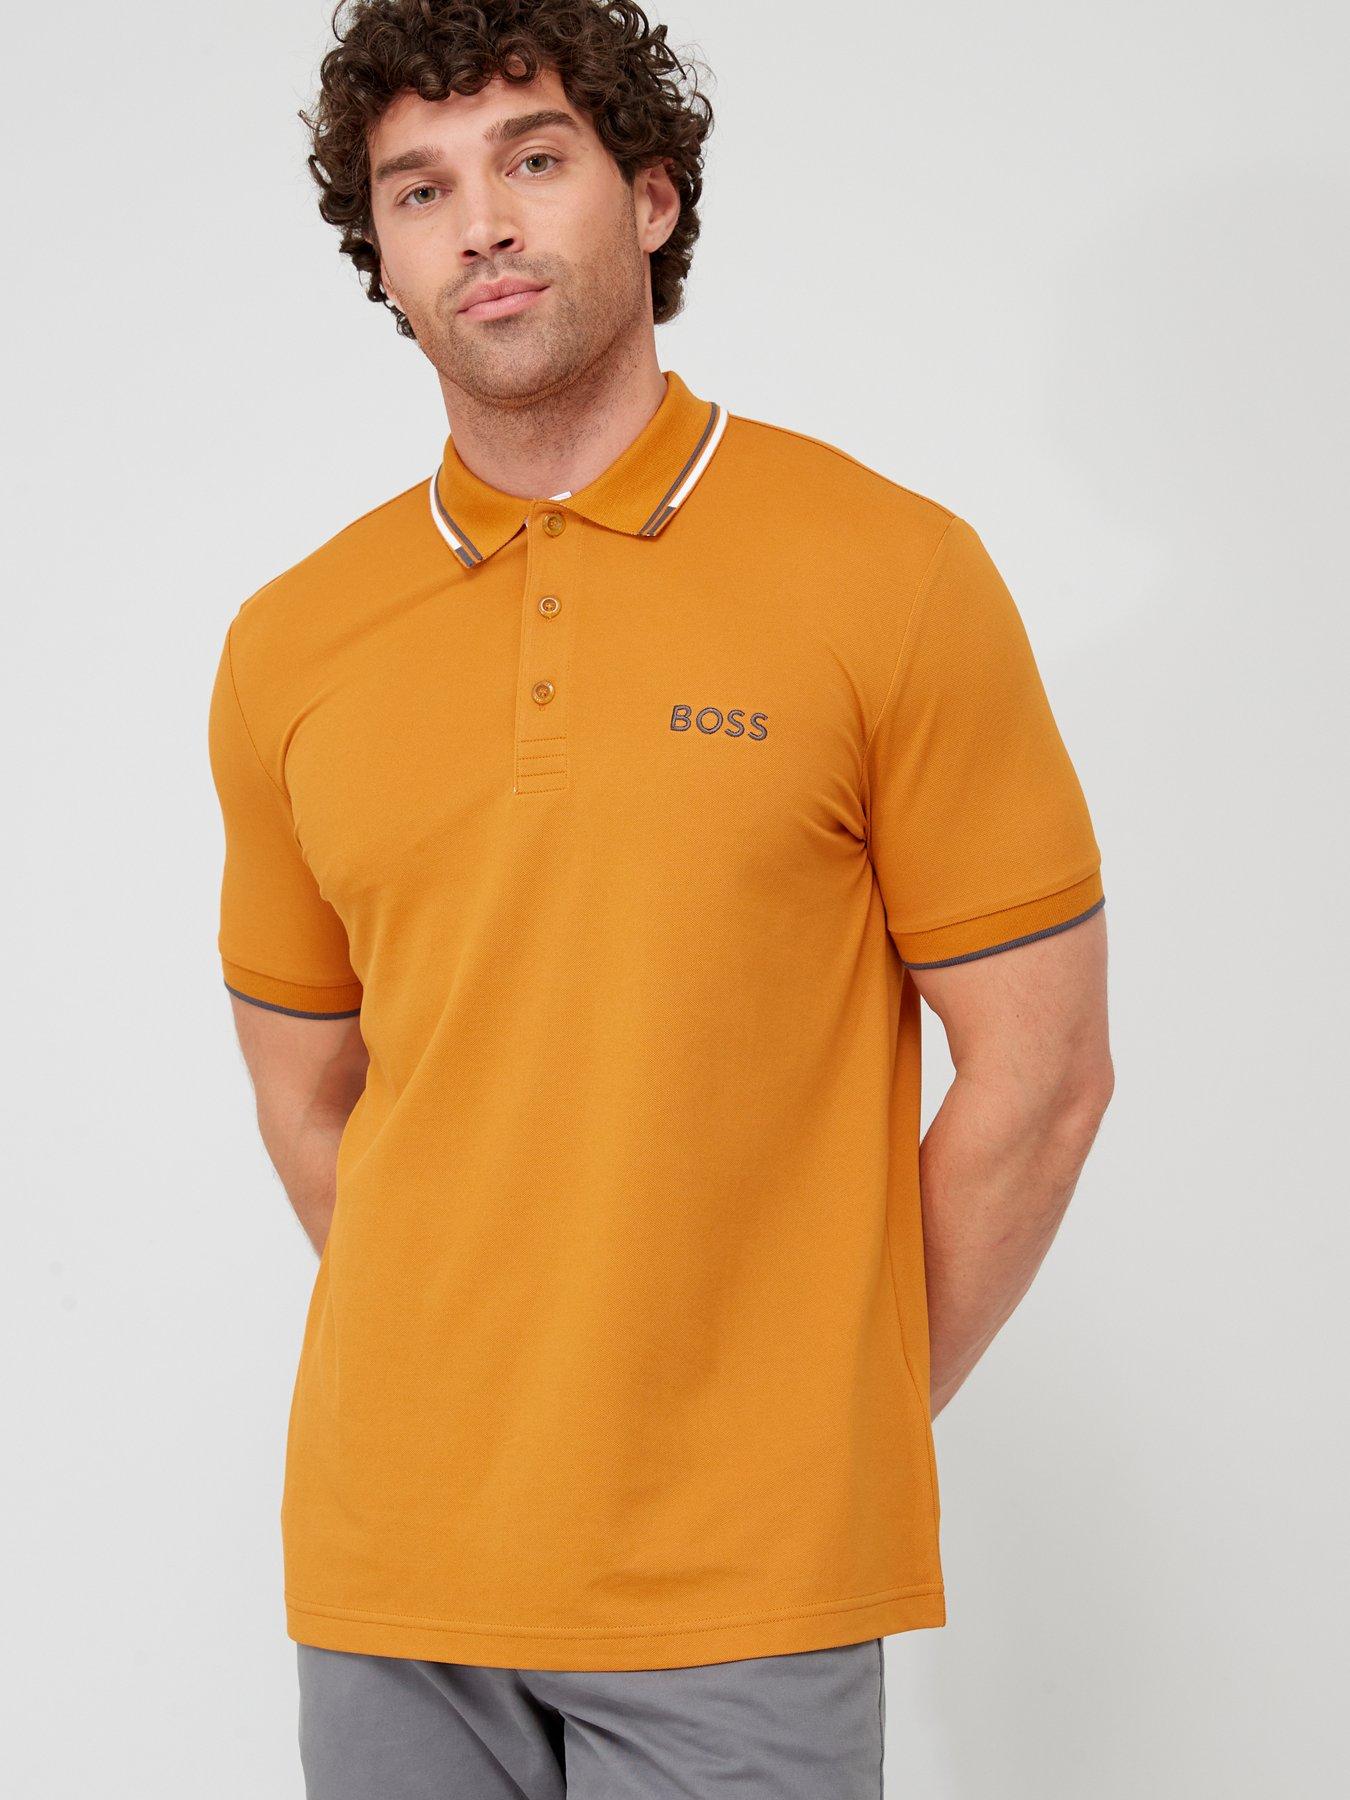 Men\'s BOSS Hugo | Shirts | Polo BOSS Polos Shop Very